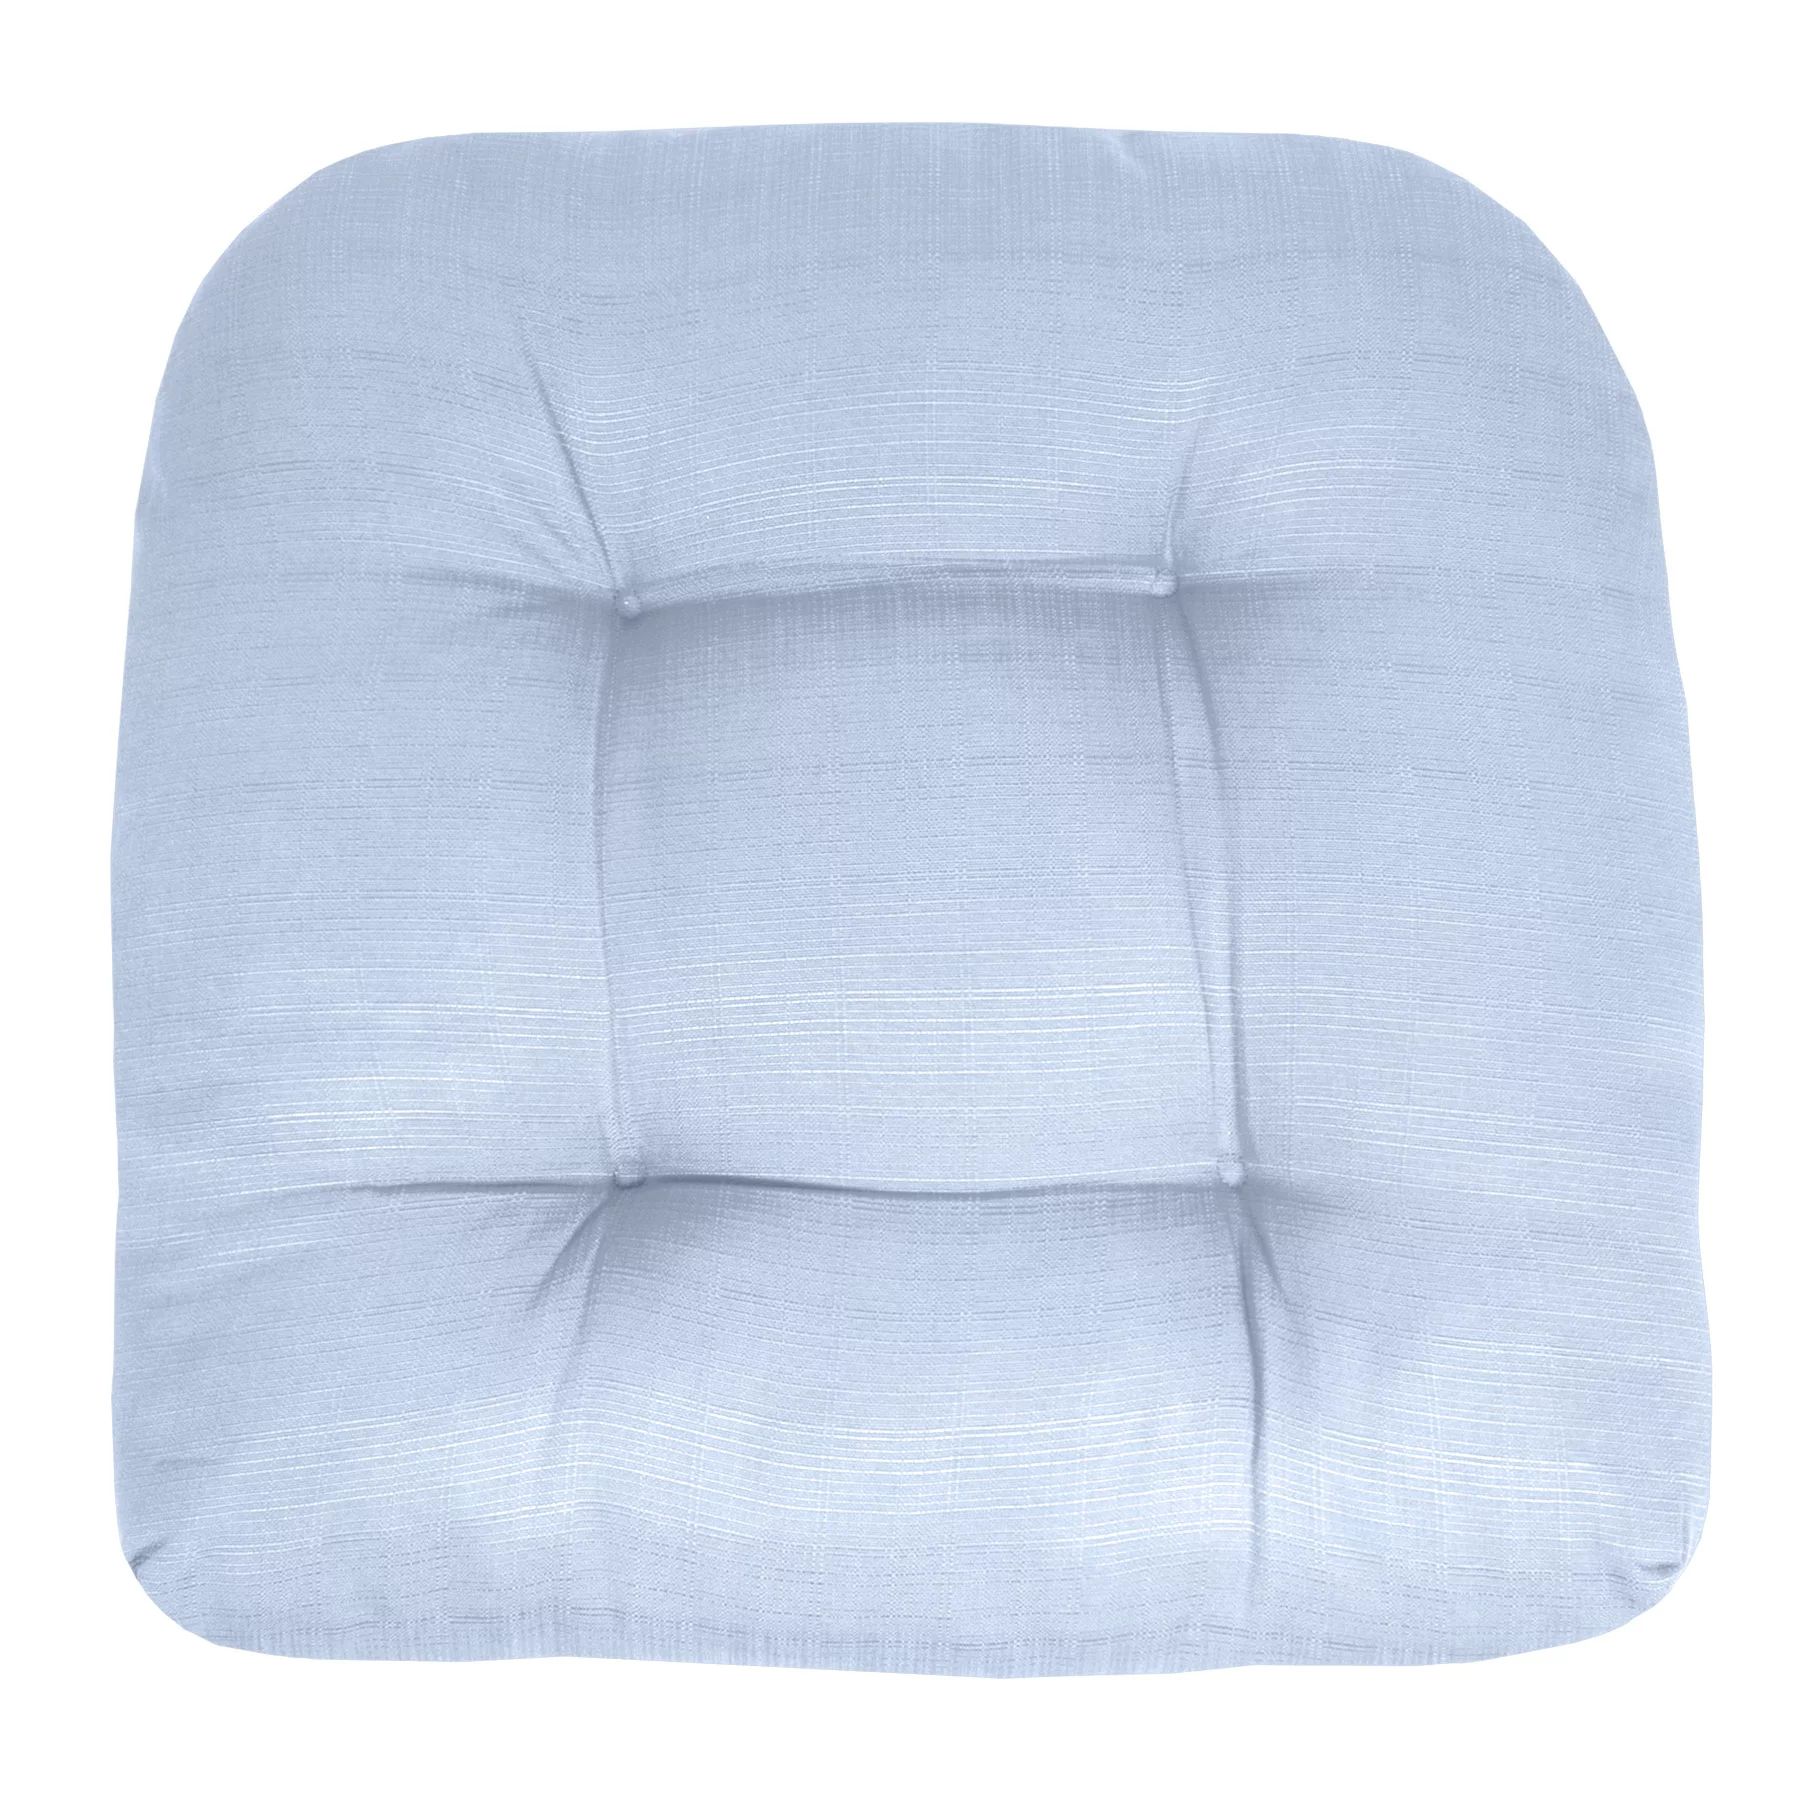 Indoor-Outdoor Reversible Patio Seat Cushion Pad 2-4-6-12 Pack 19" x 19" Light Blue | Walmart (US)